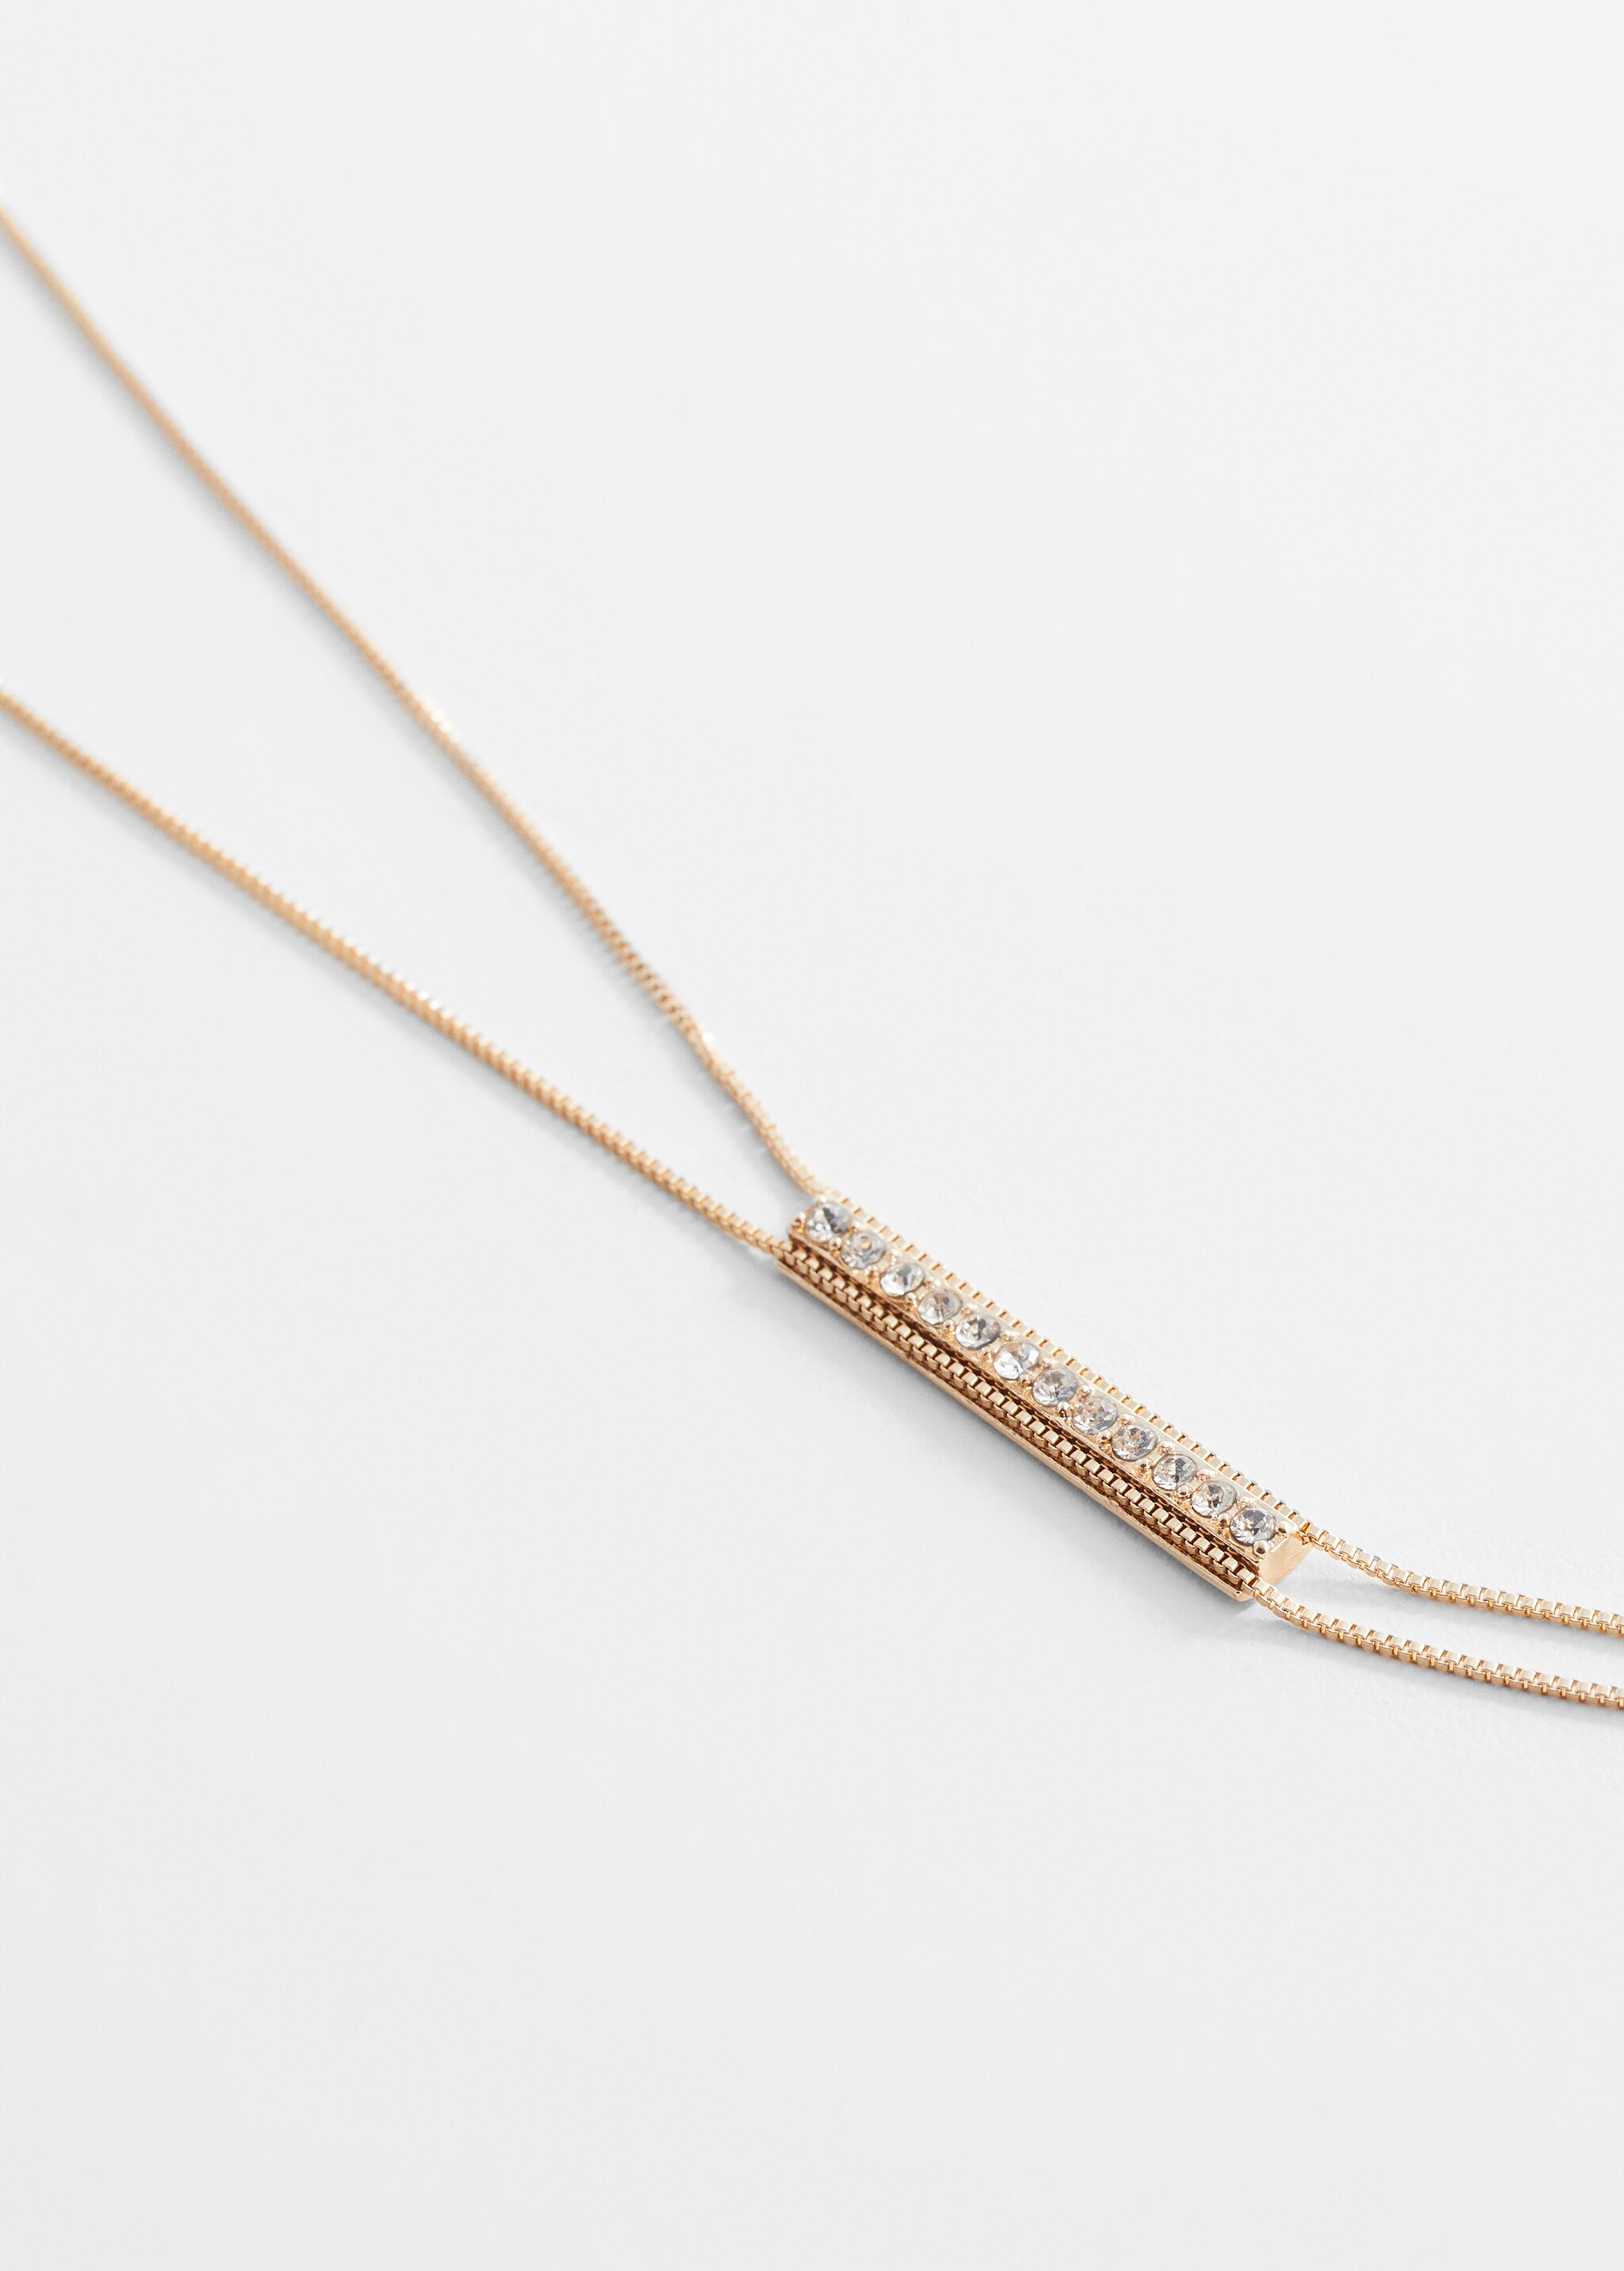 Crystal chain necklace - Medium plane